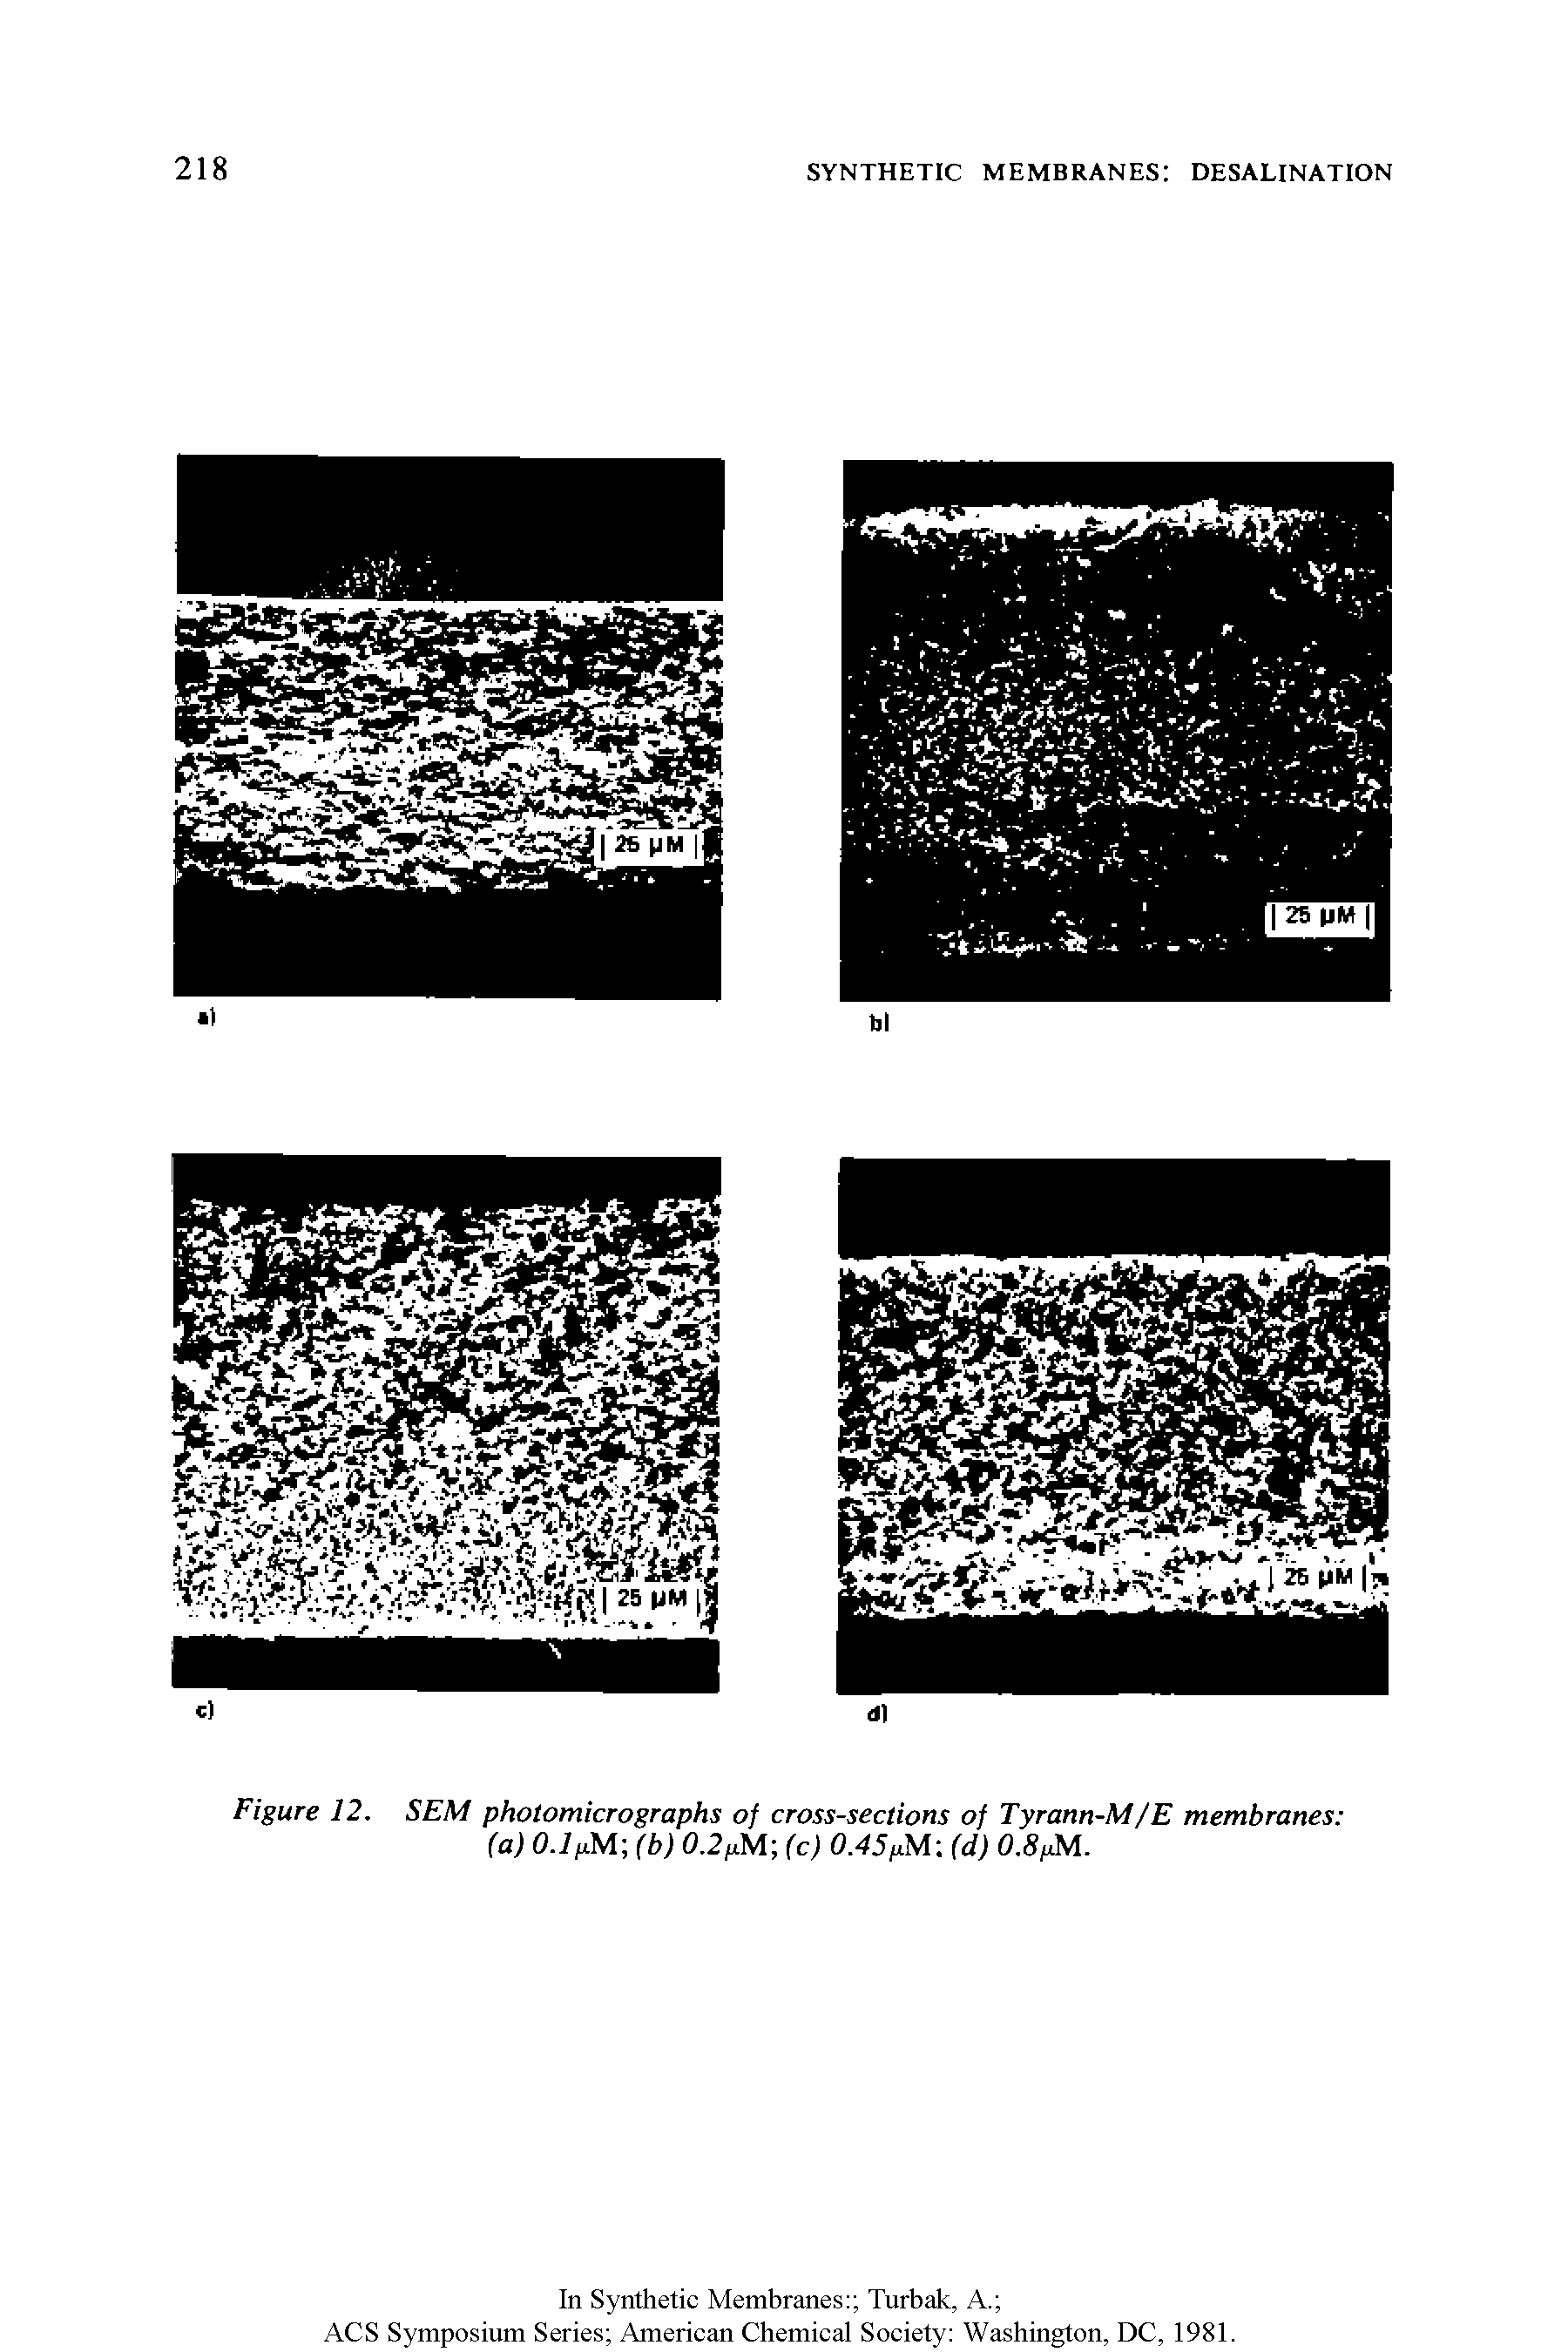 Figure 12, SEM photomicrographs of cross-sections of Tyrann-M/E membranes (a) (b) 0.2 M (c) 0A5pM (d) 0,8fM.